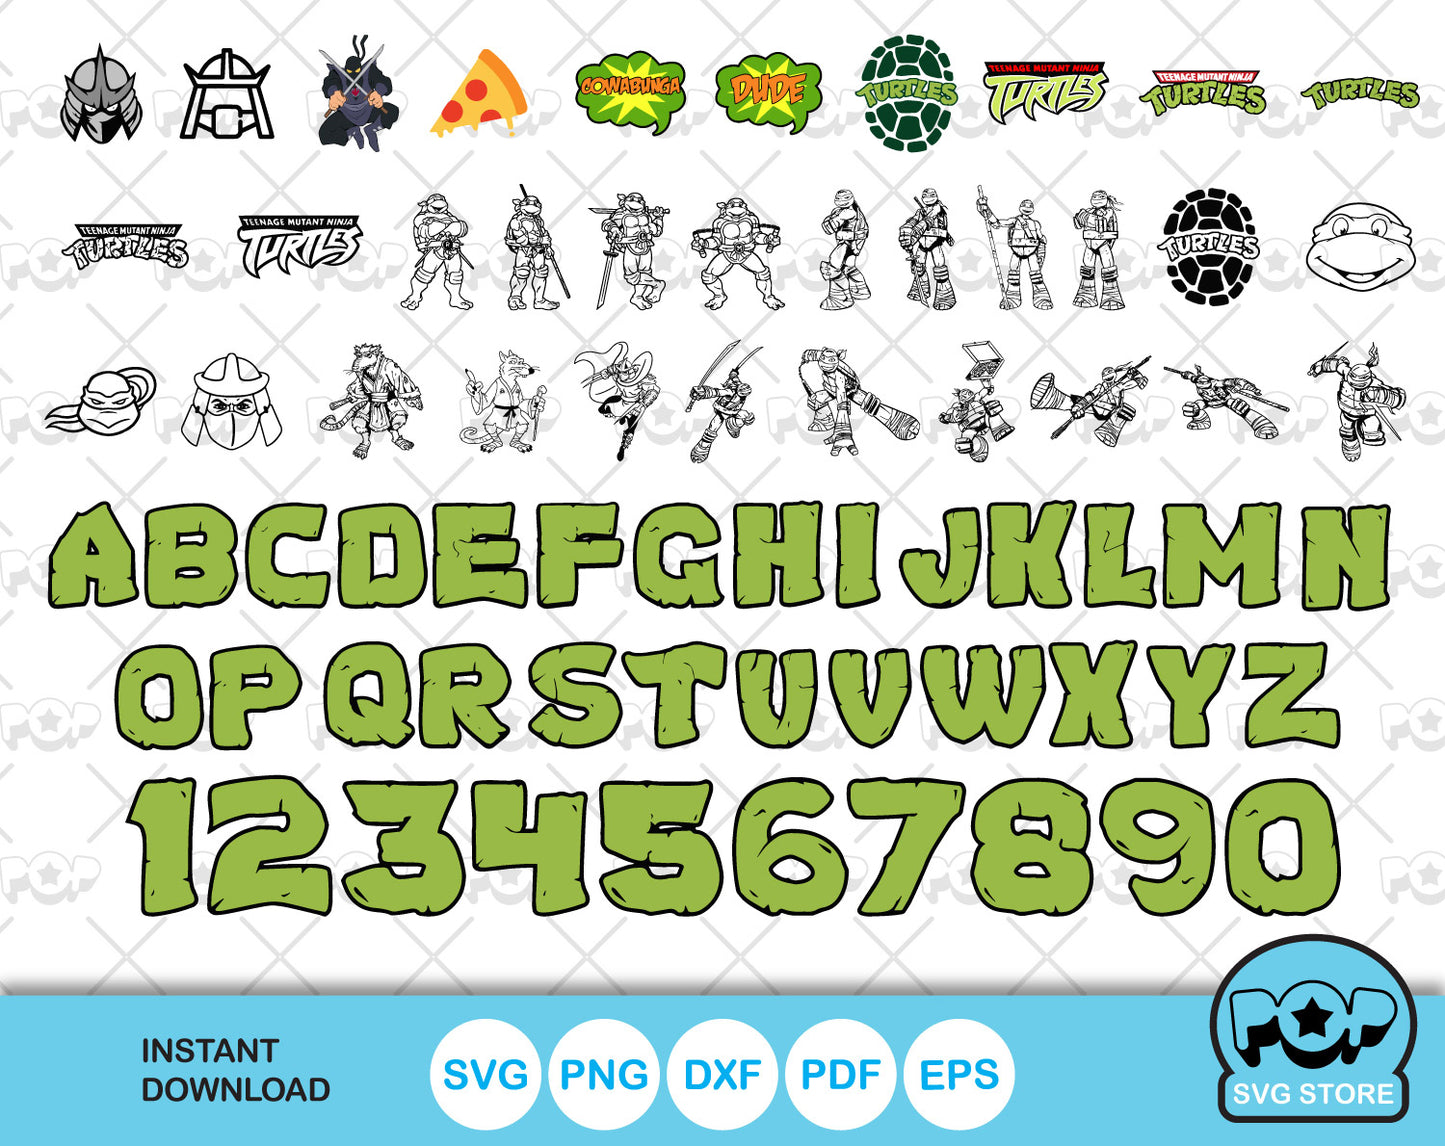 Ninja Turtles clipart + alphabet, Teenage Mutant Ninja Turtles SVG cutting files, PNG, DXF, instant download